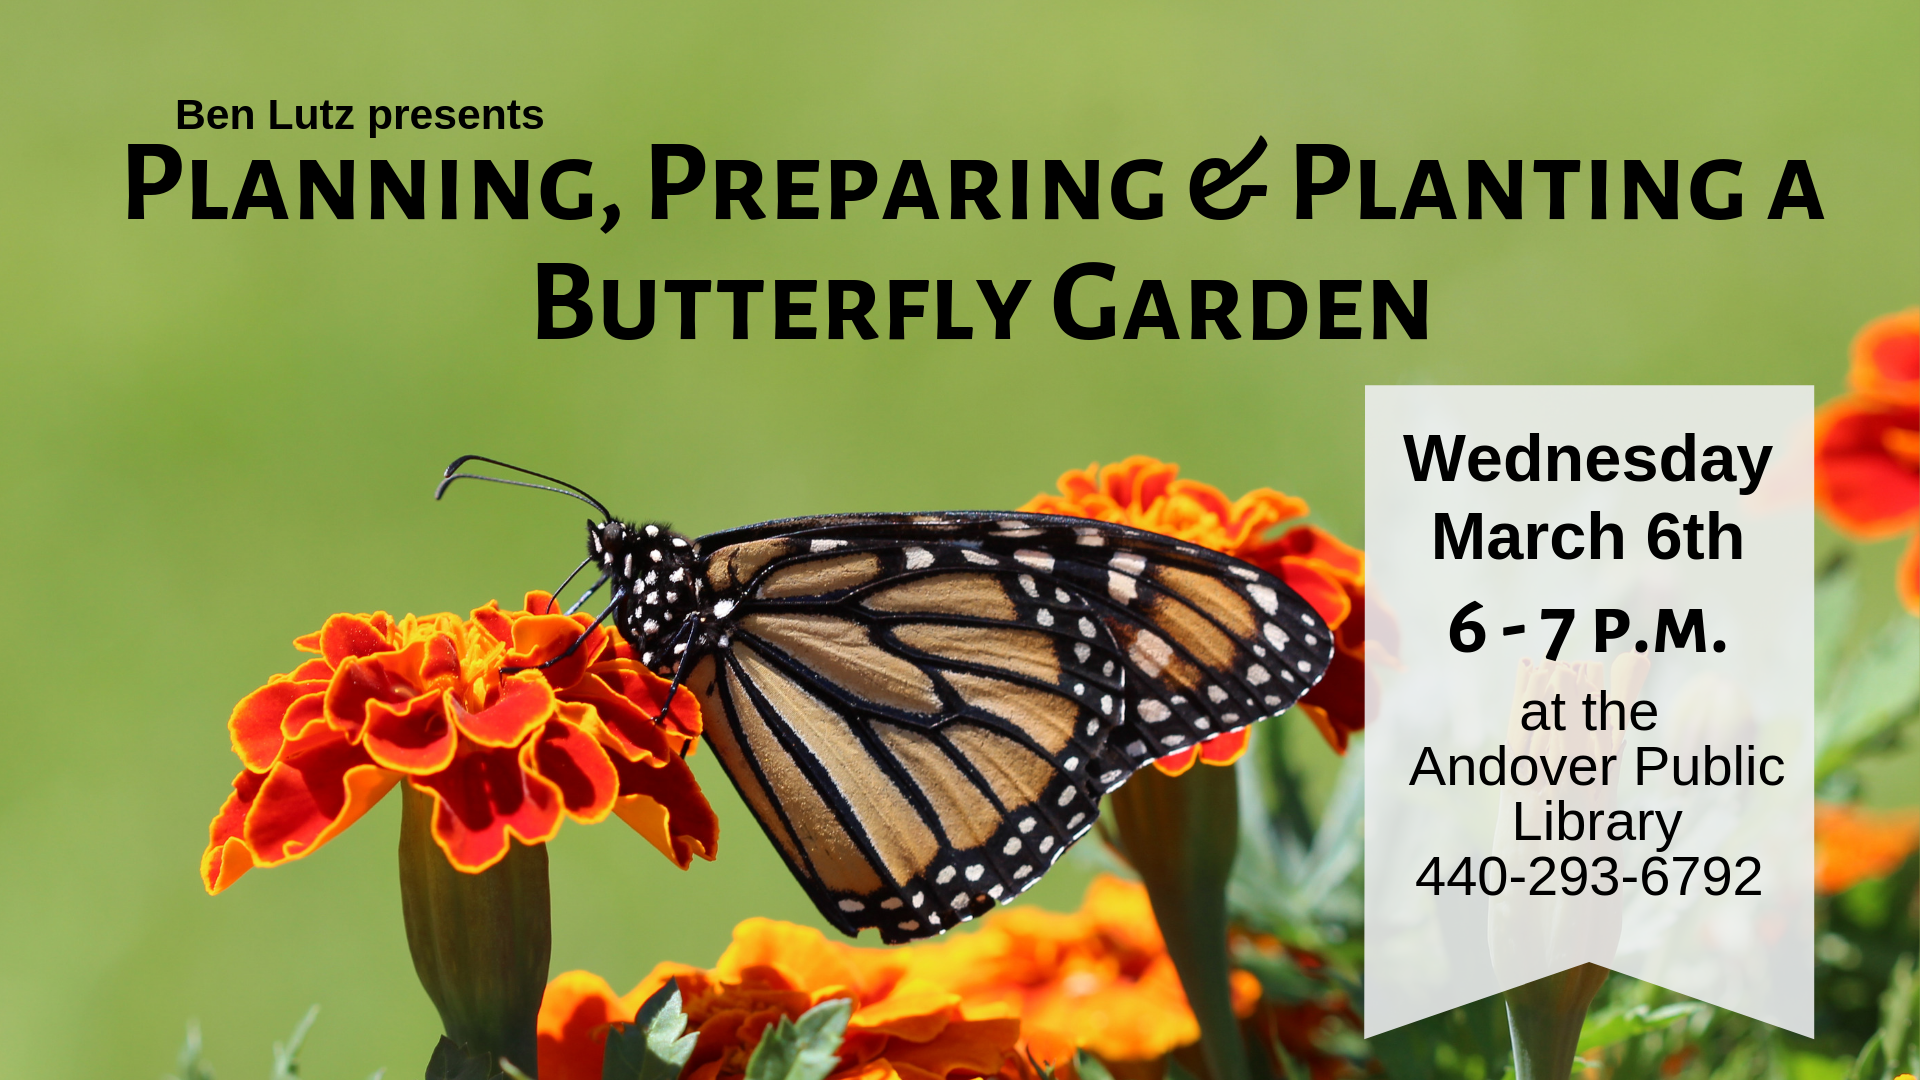 Planning, Preparing & Planting a Butterfly Garden